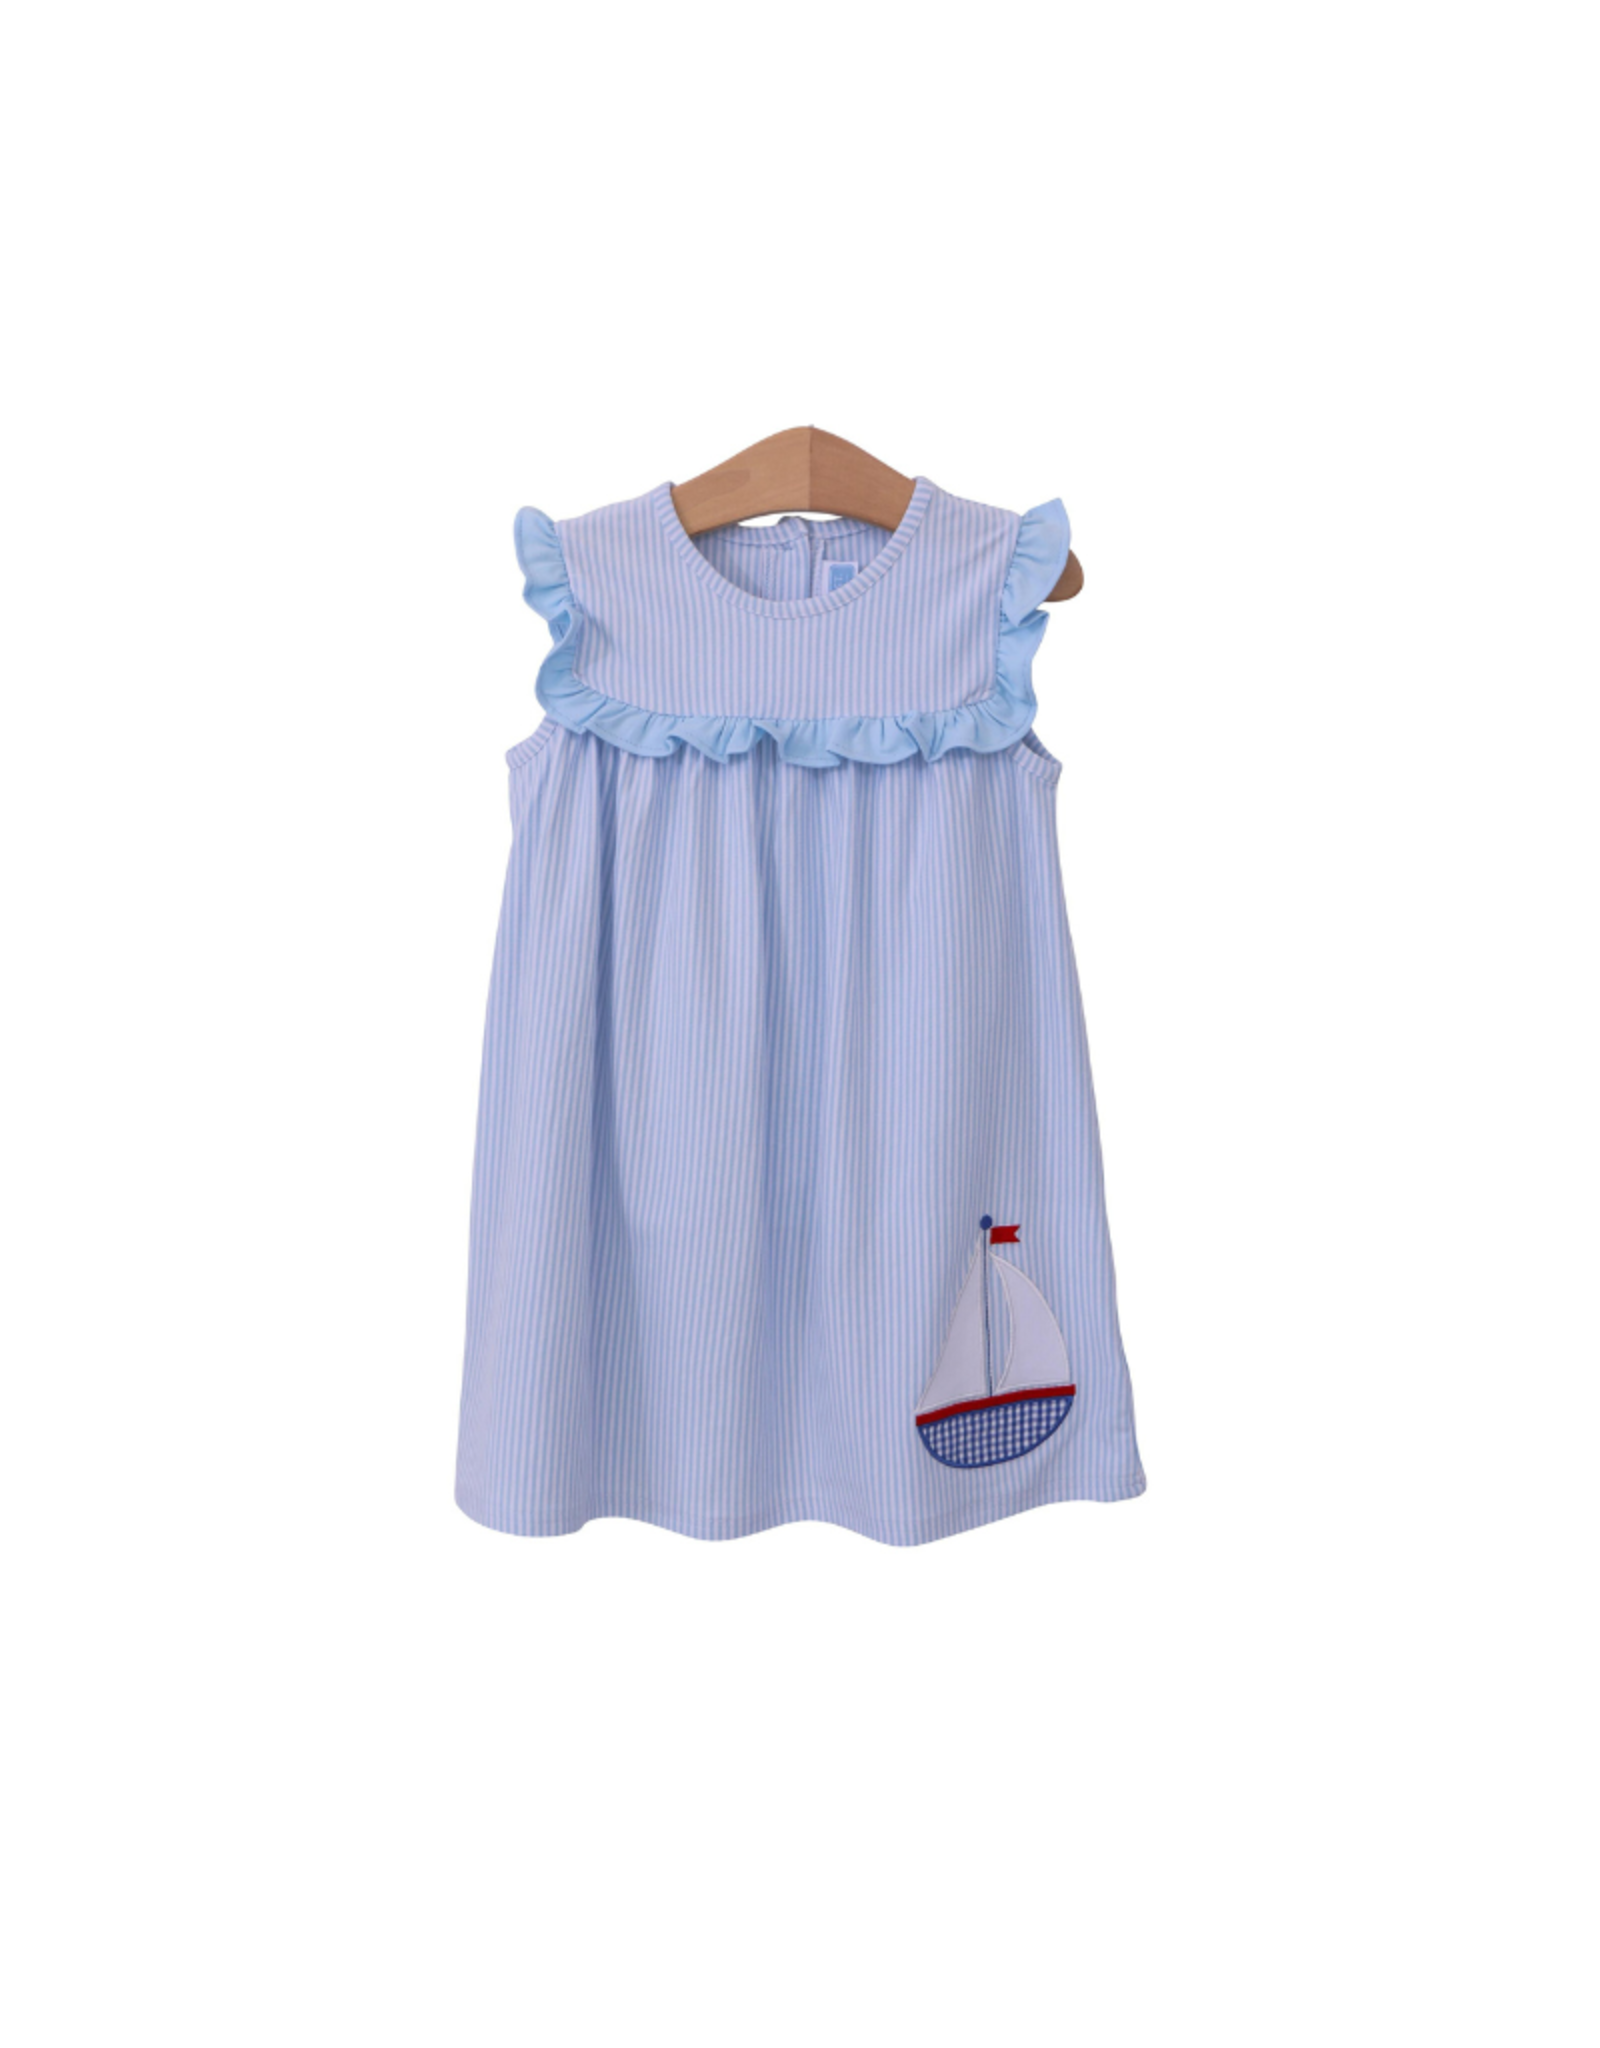 Trotter Street Kids Sailboat Dress, Blue & White Stripe